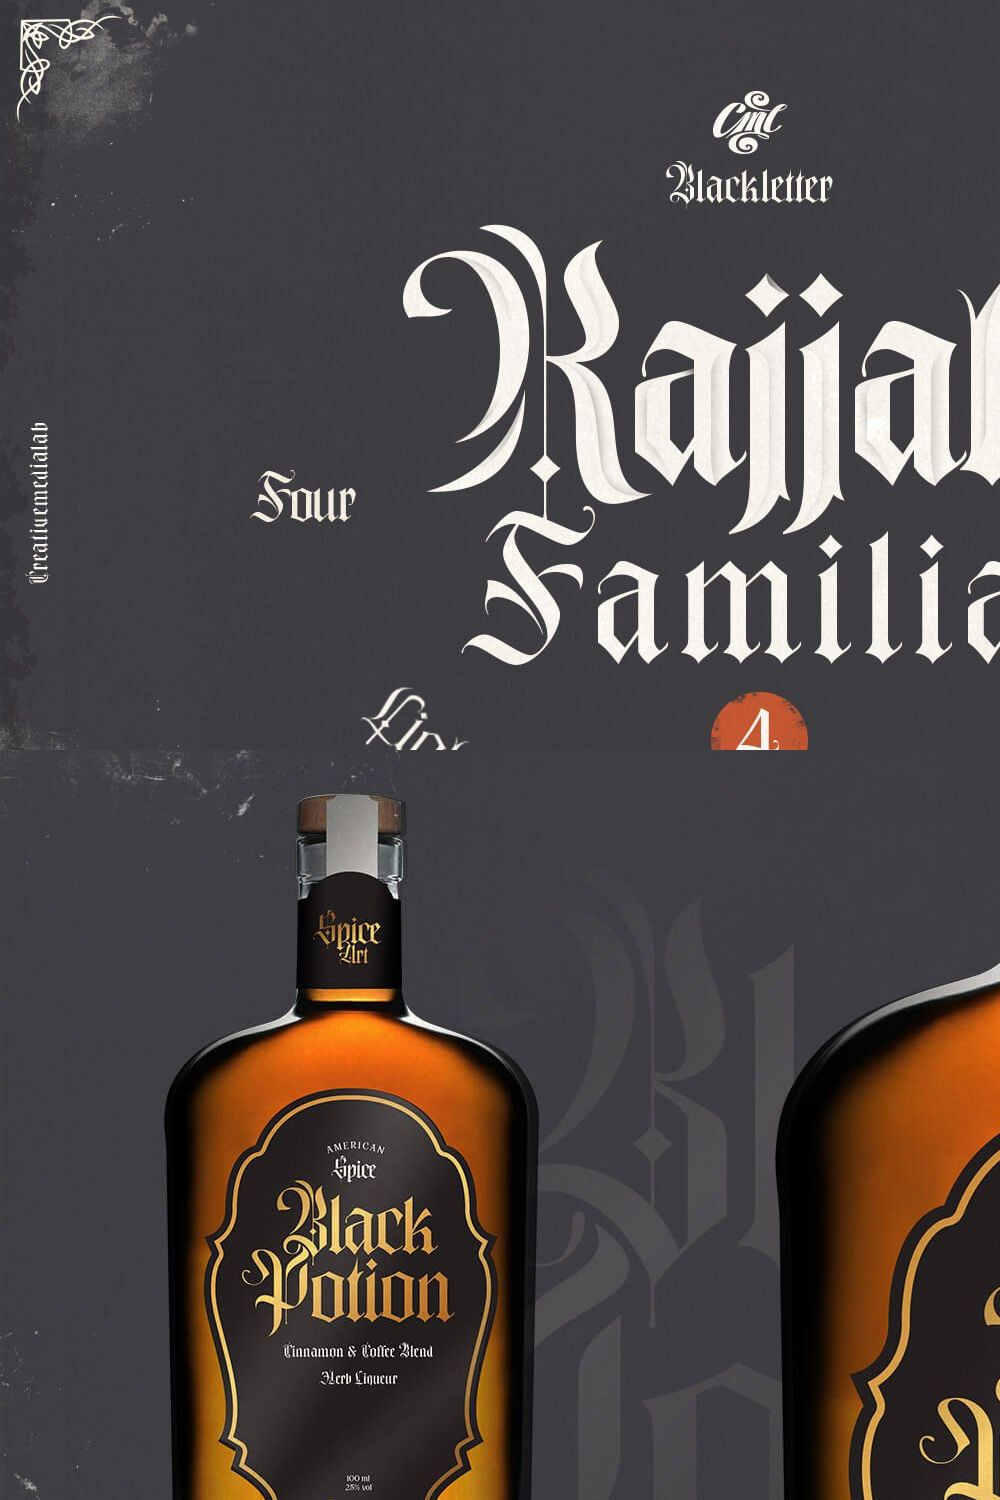 Rajjah Familia - Blackletter family pinterest preview image.